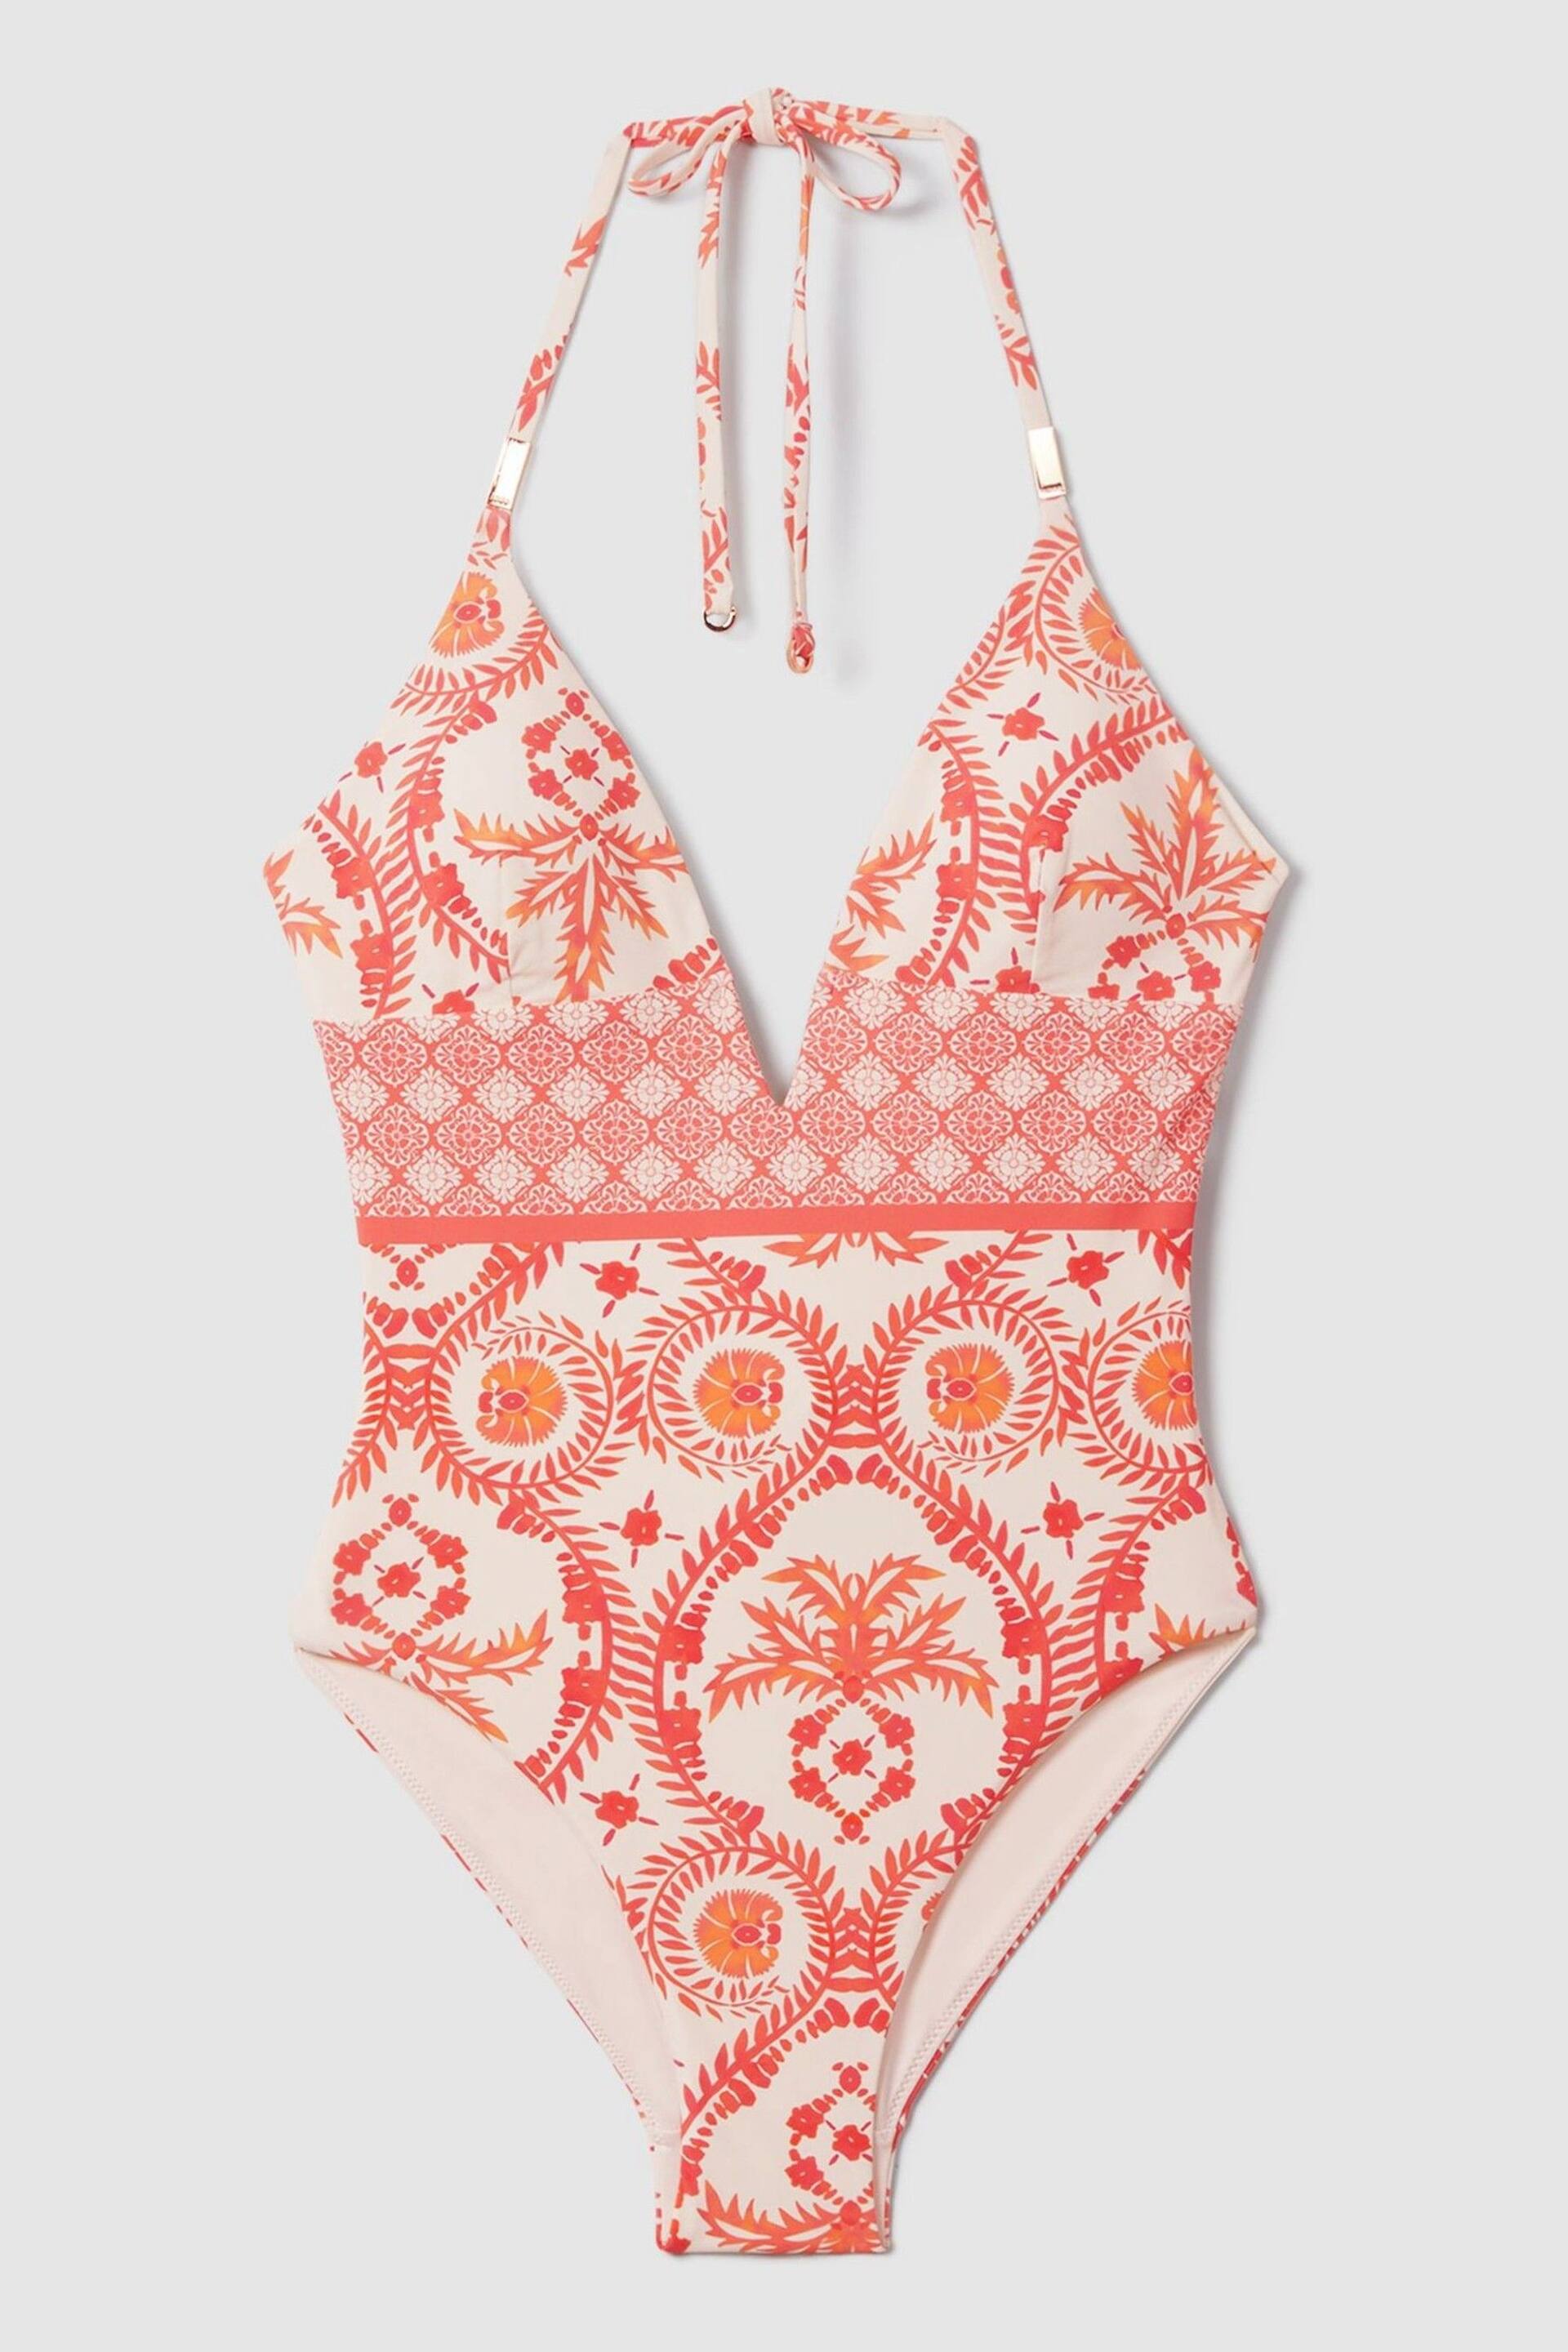 Reiss Cream/Coral Leonora Printed Plunge Neck Swimsuit - Image 2 of 6